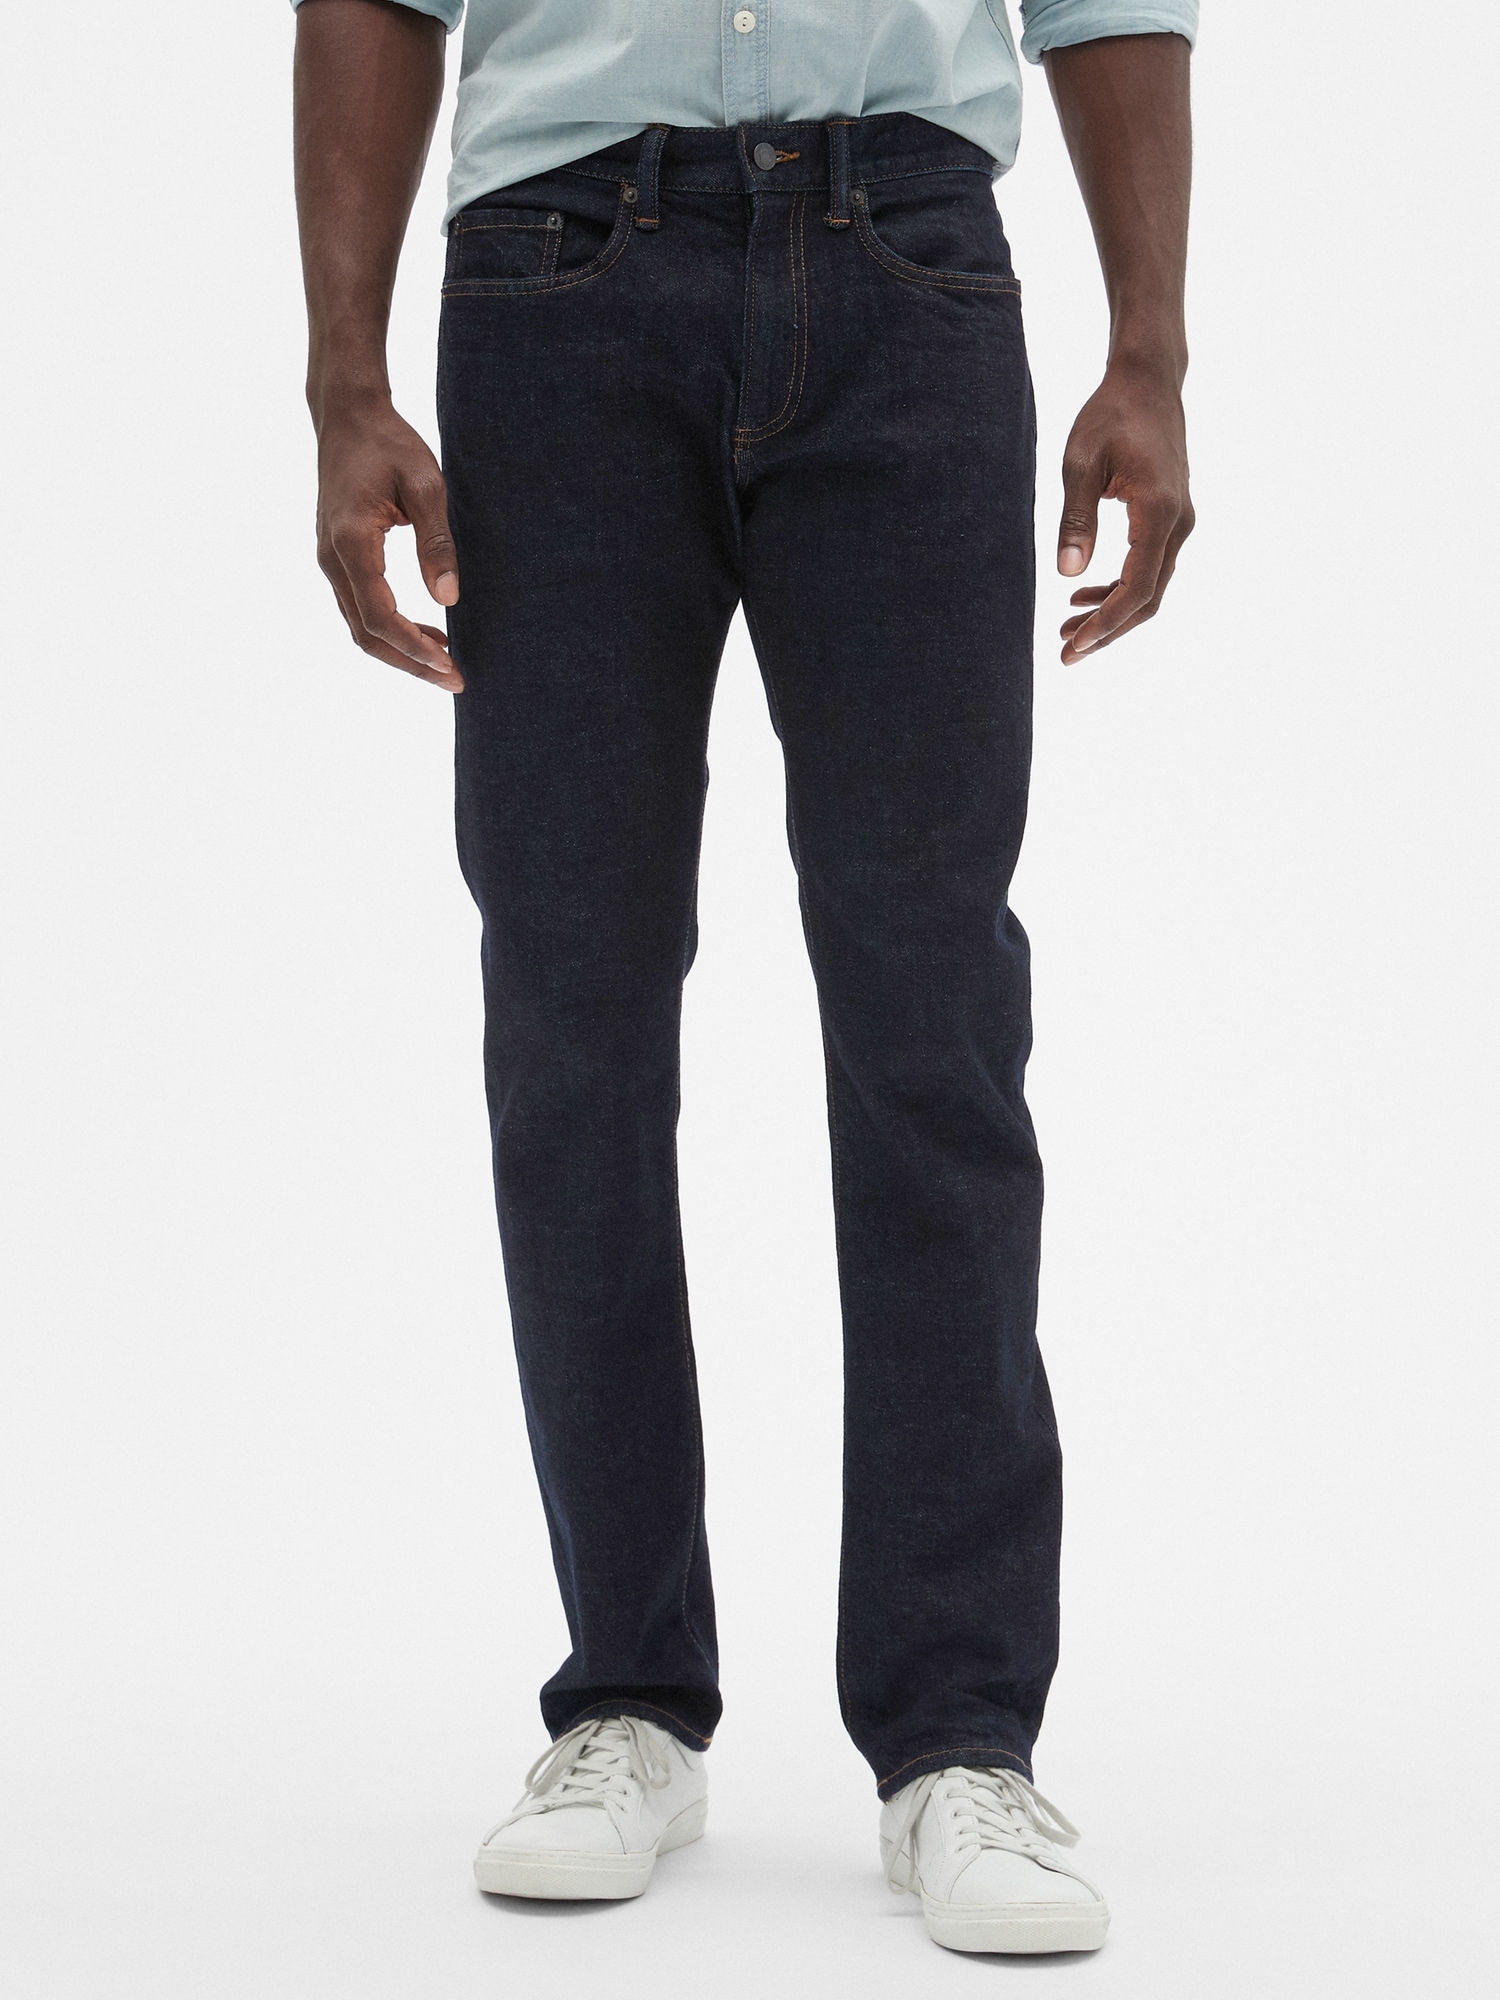 GapFlex Slim Jeans with Washwell | Gap Factory